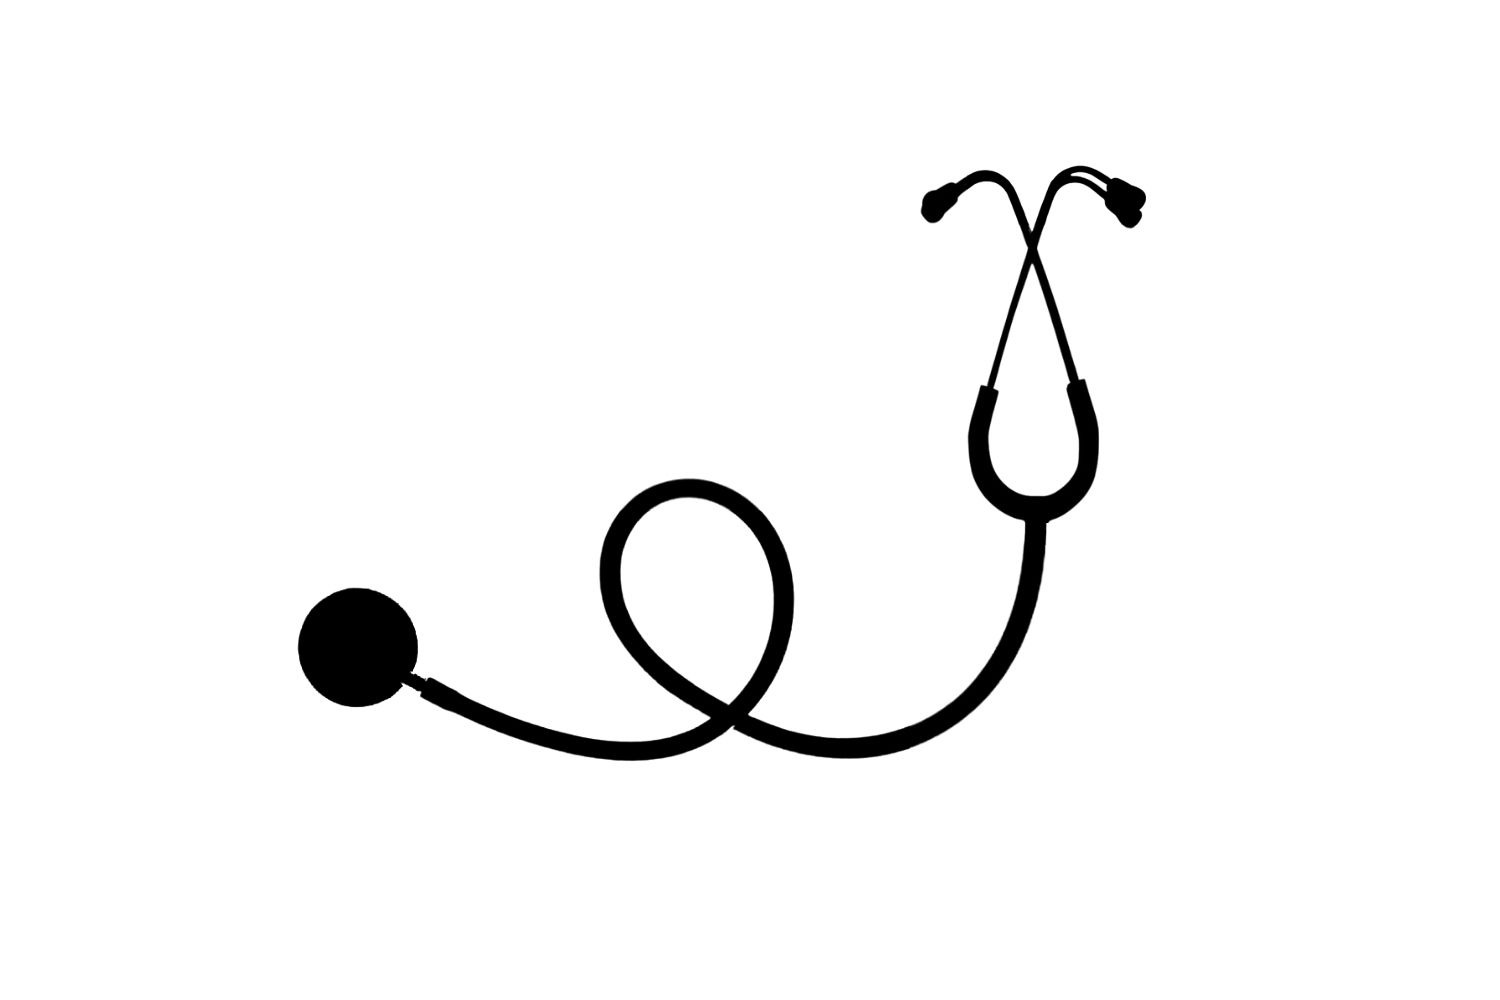 Stethoscope SVG Free Download